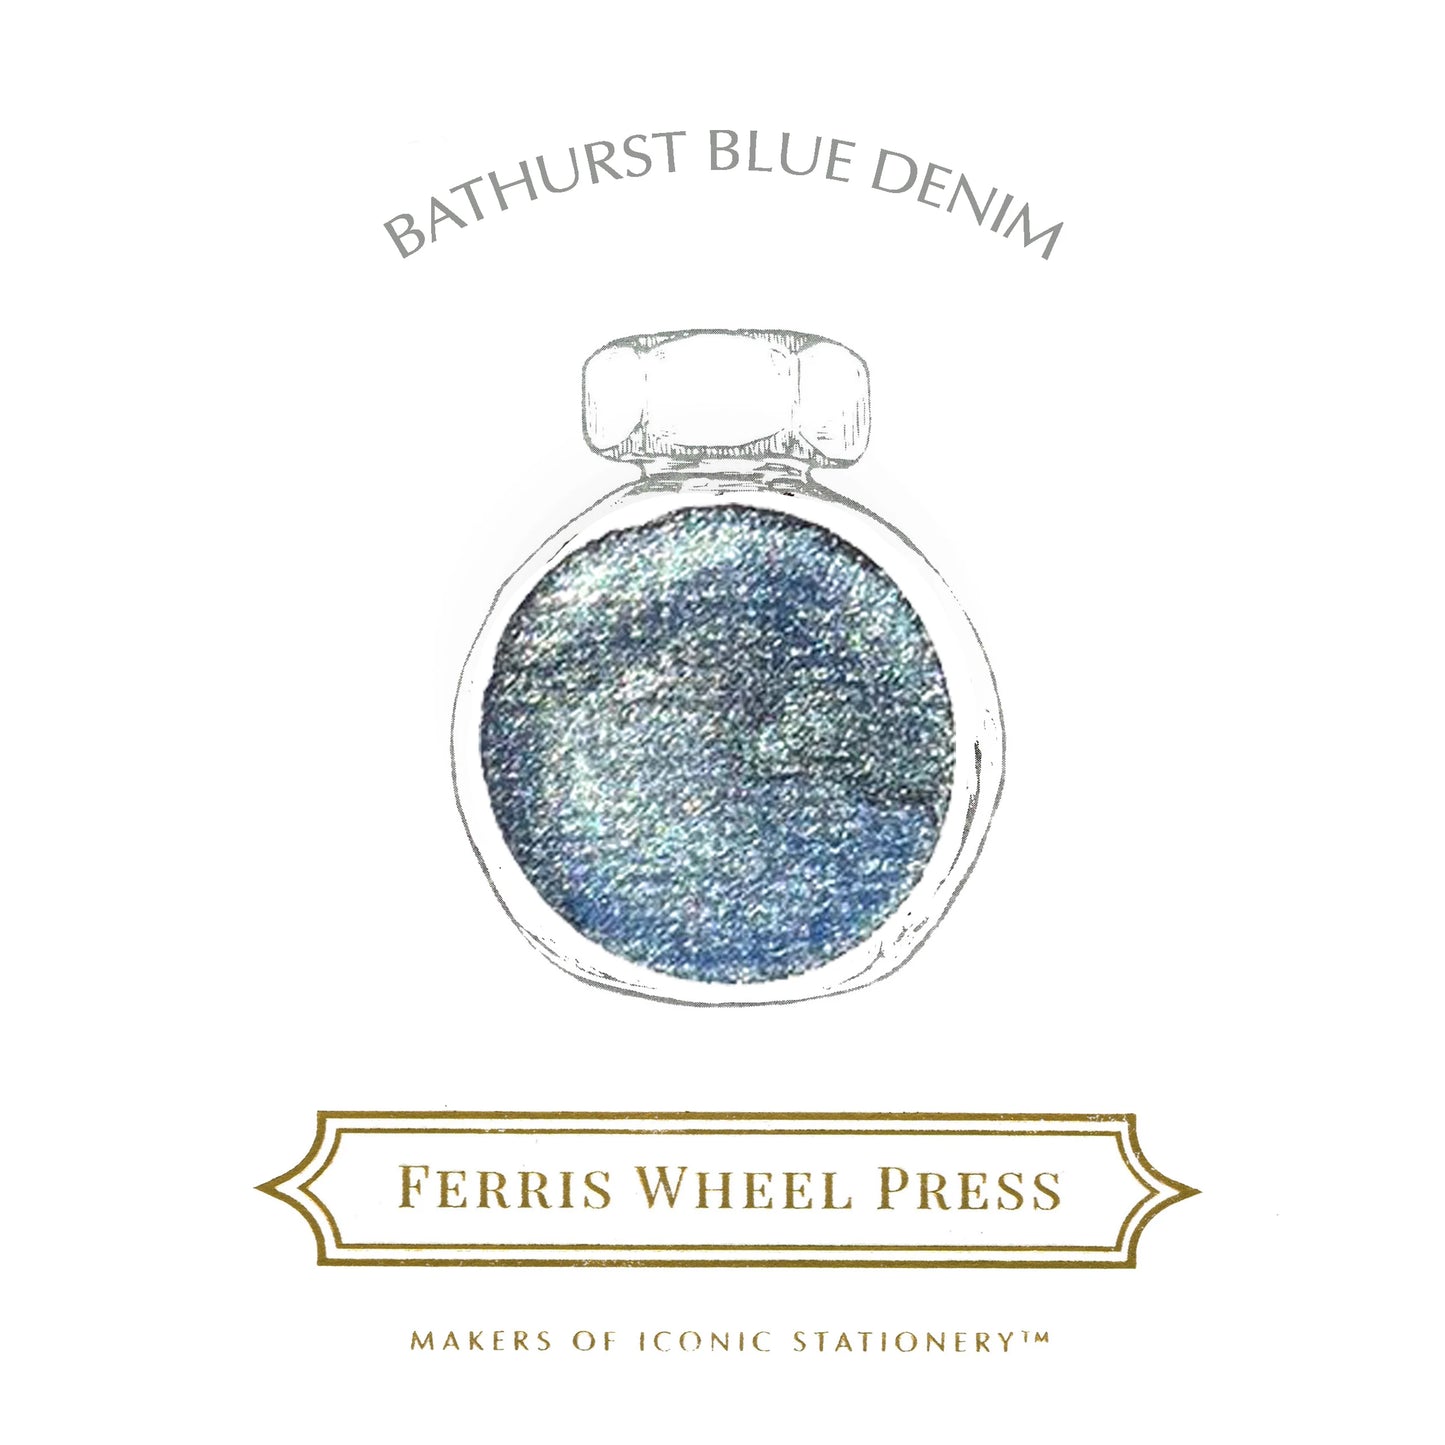 Ferris Wheel Press, Bathurst Blue Denim, The Fashion District Collection, 38ml Ink